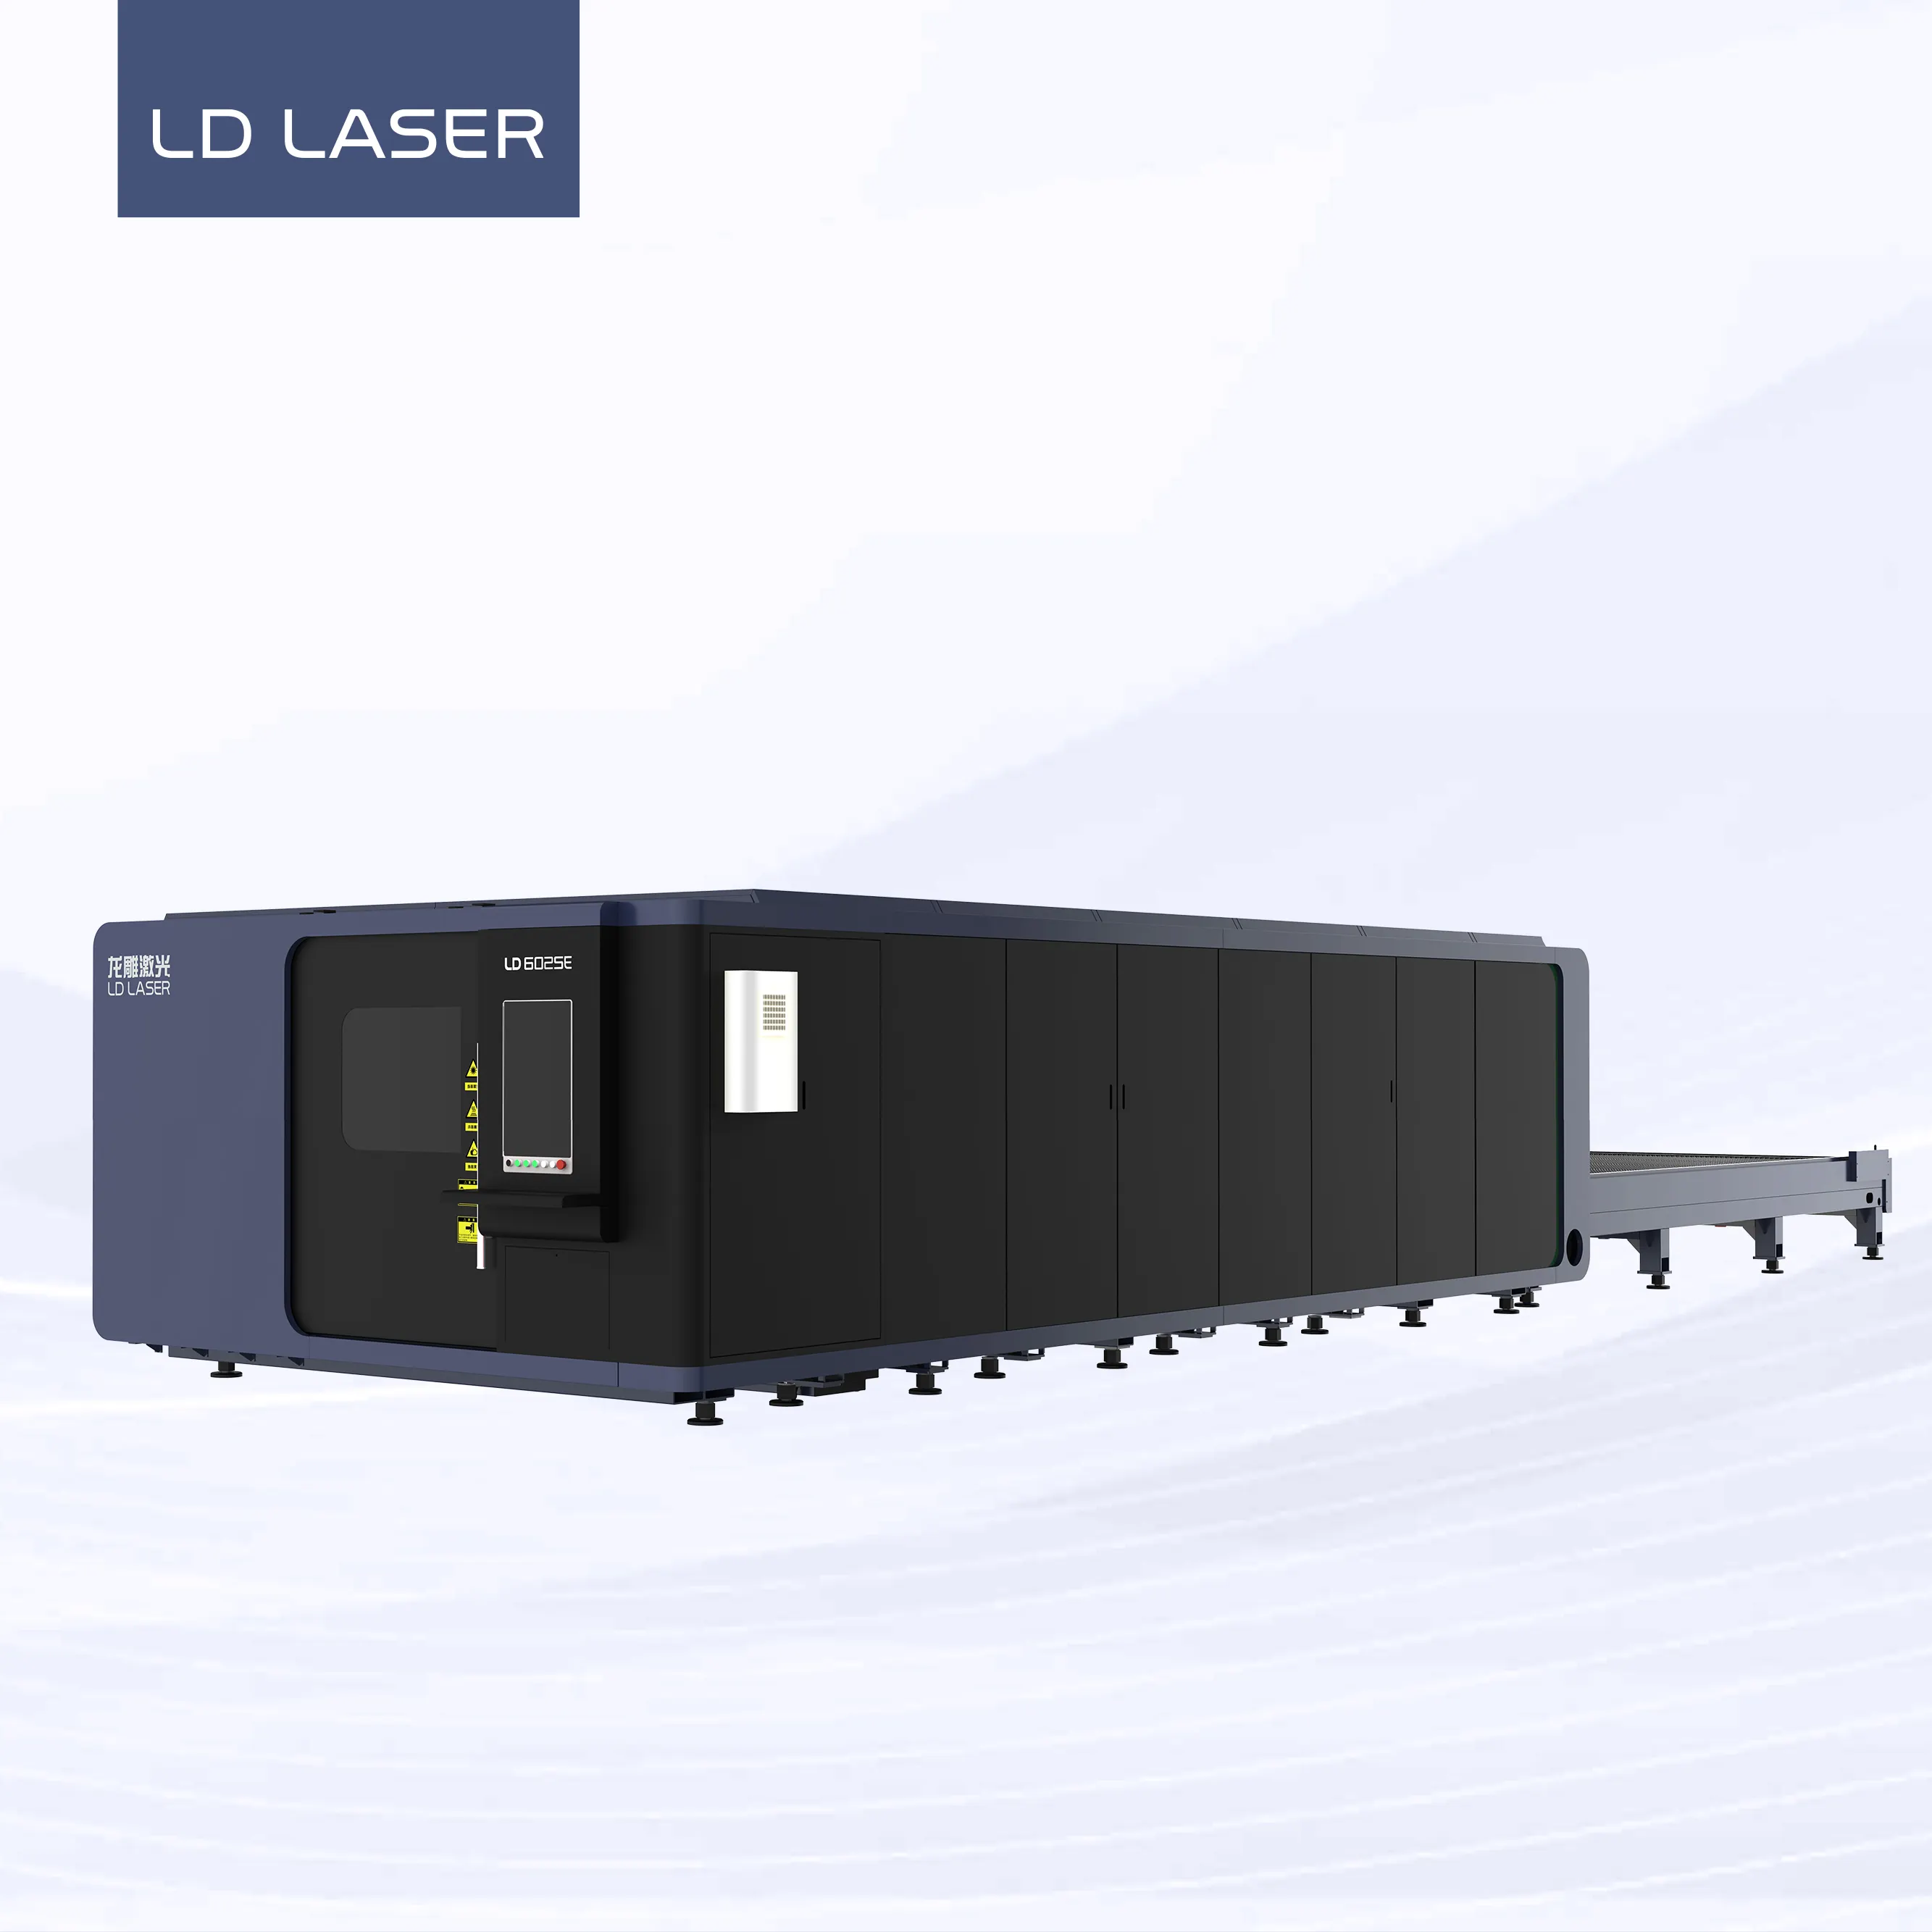 CNC Blech faserlaser schneide maschinen Lasers ch neider Industrie Laser ausrüstung